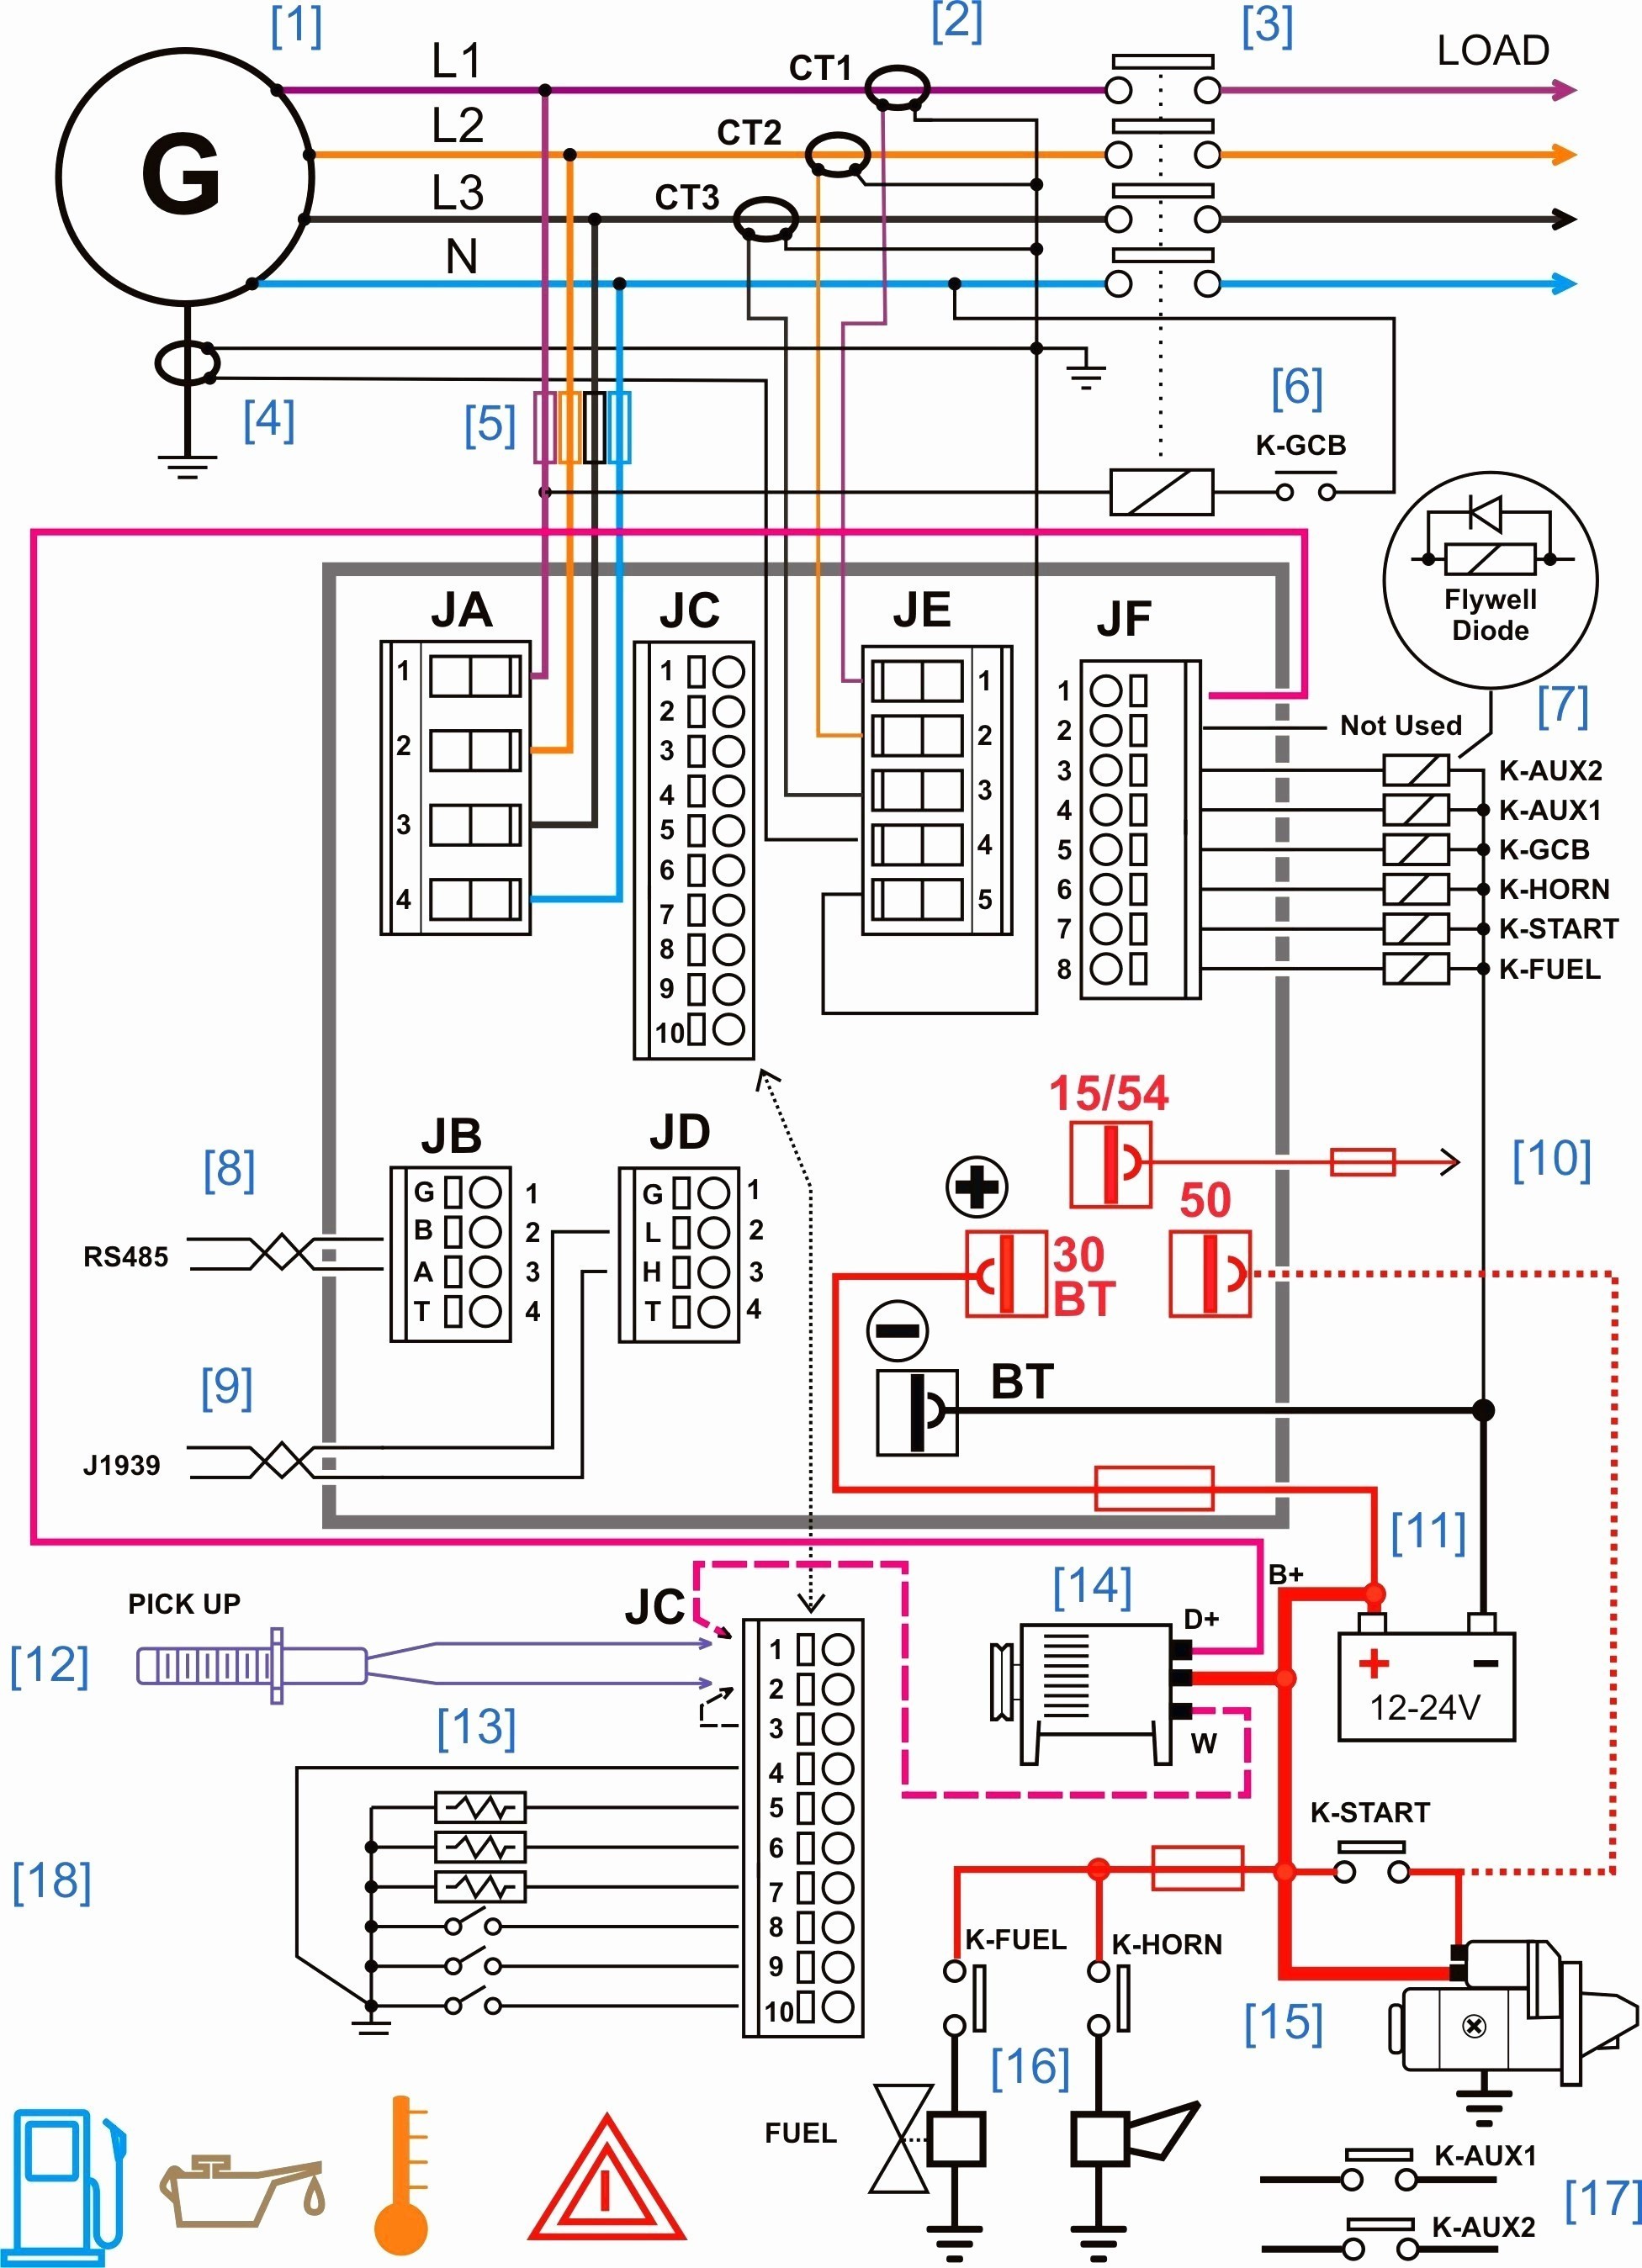 Wiring Diagram for Automotive Ac Best Automotive Wiring Diagram Line Save Best Wiring Diagram Od Rv